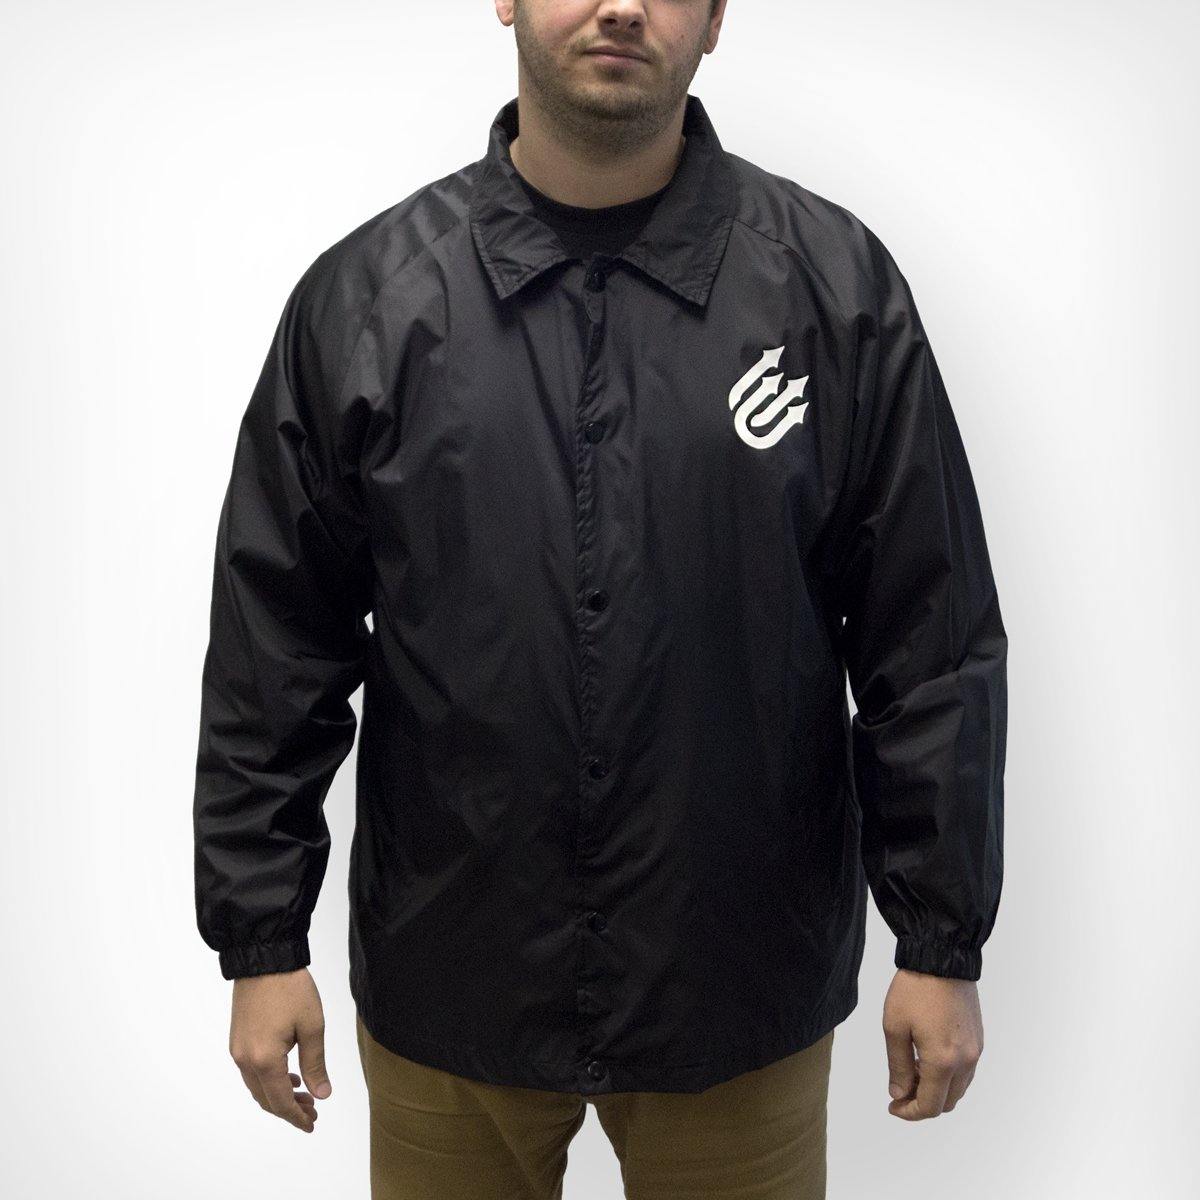 Buy – Homicide Unit Coaches Jacket – Cold Cuts Ltd